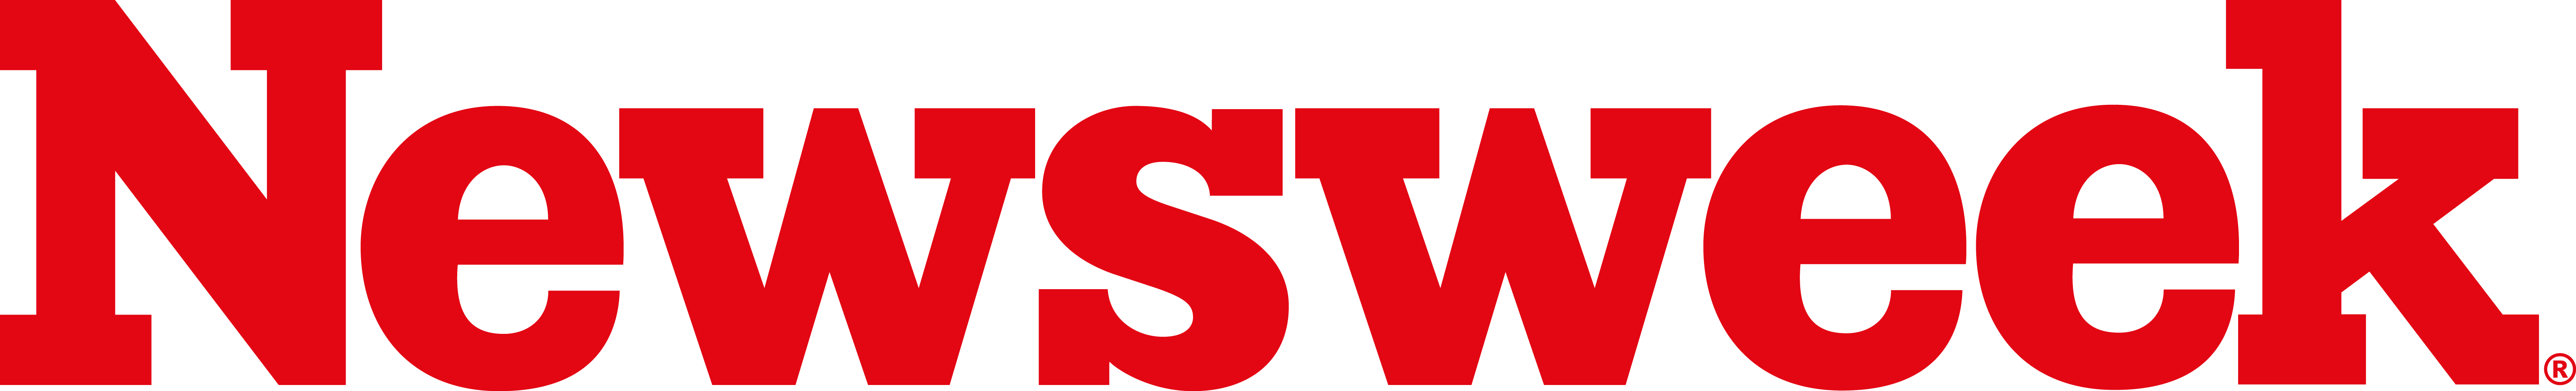 Newsweek logo Red